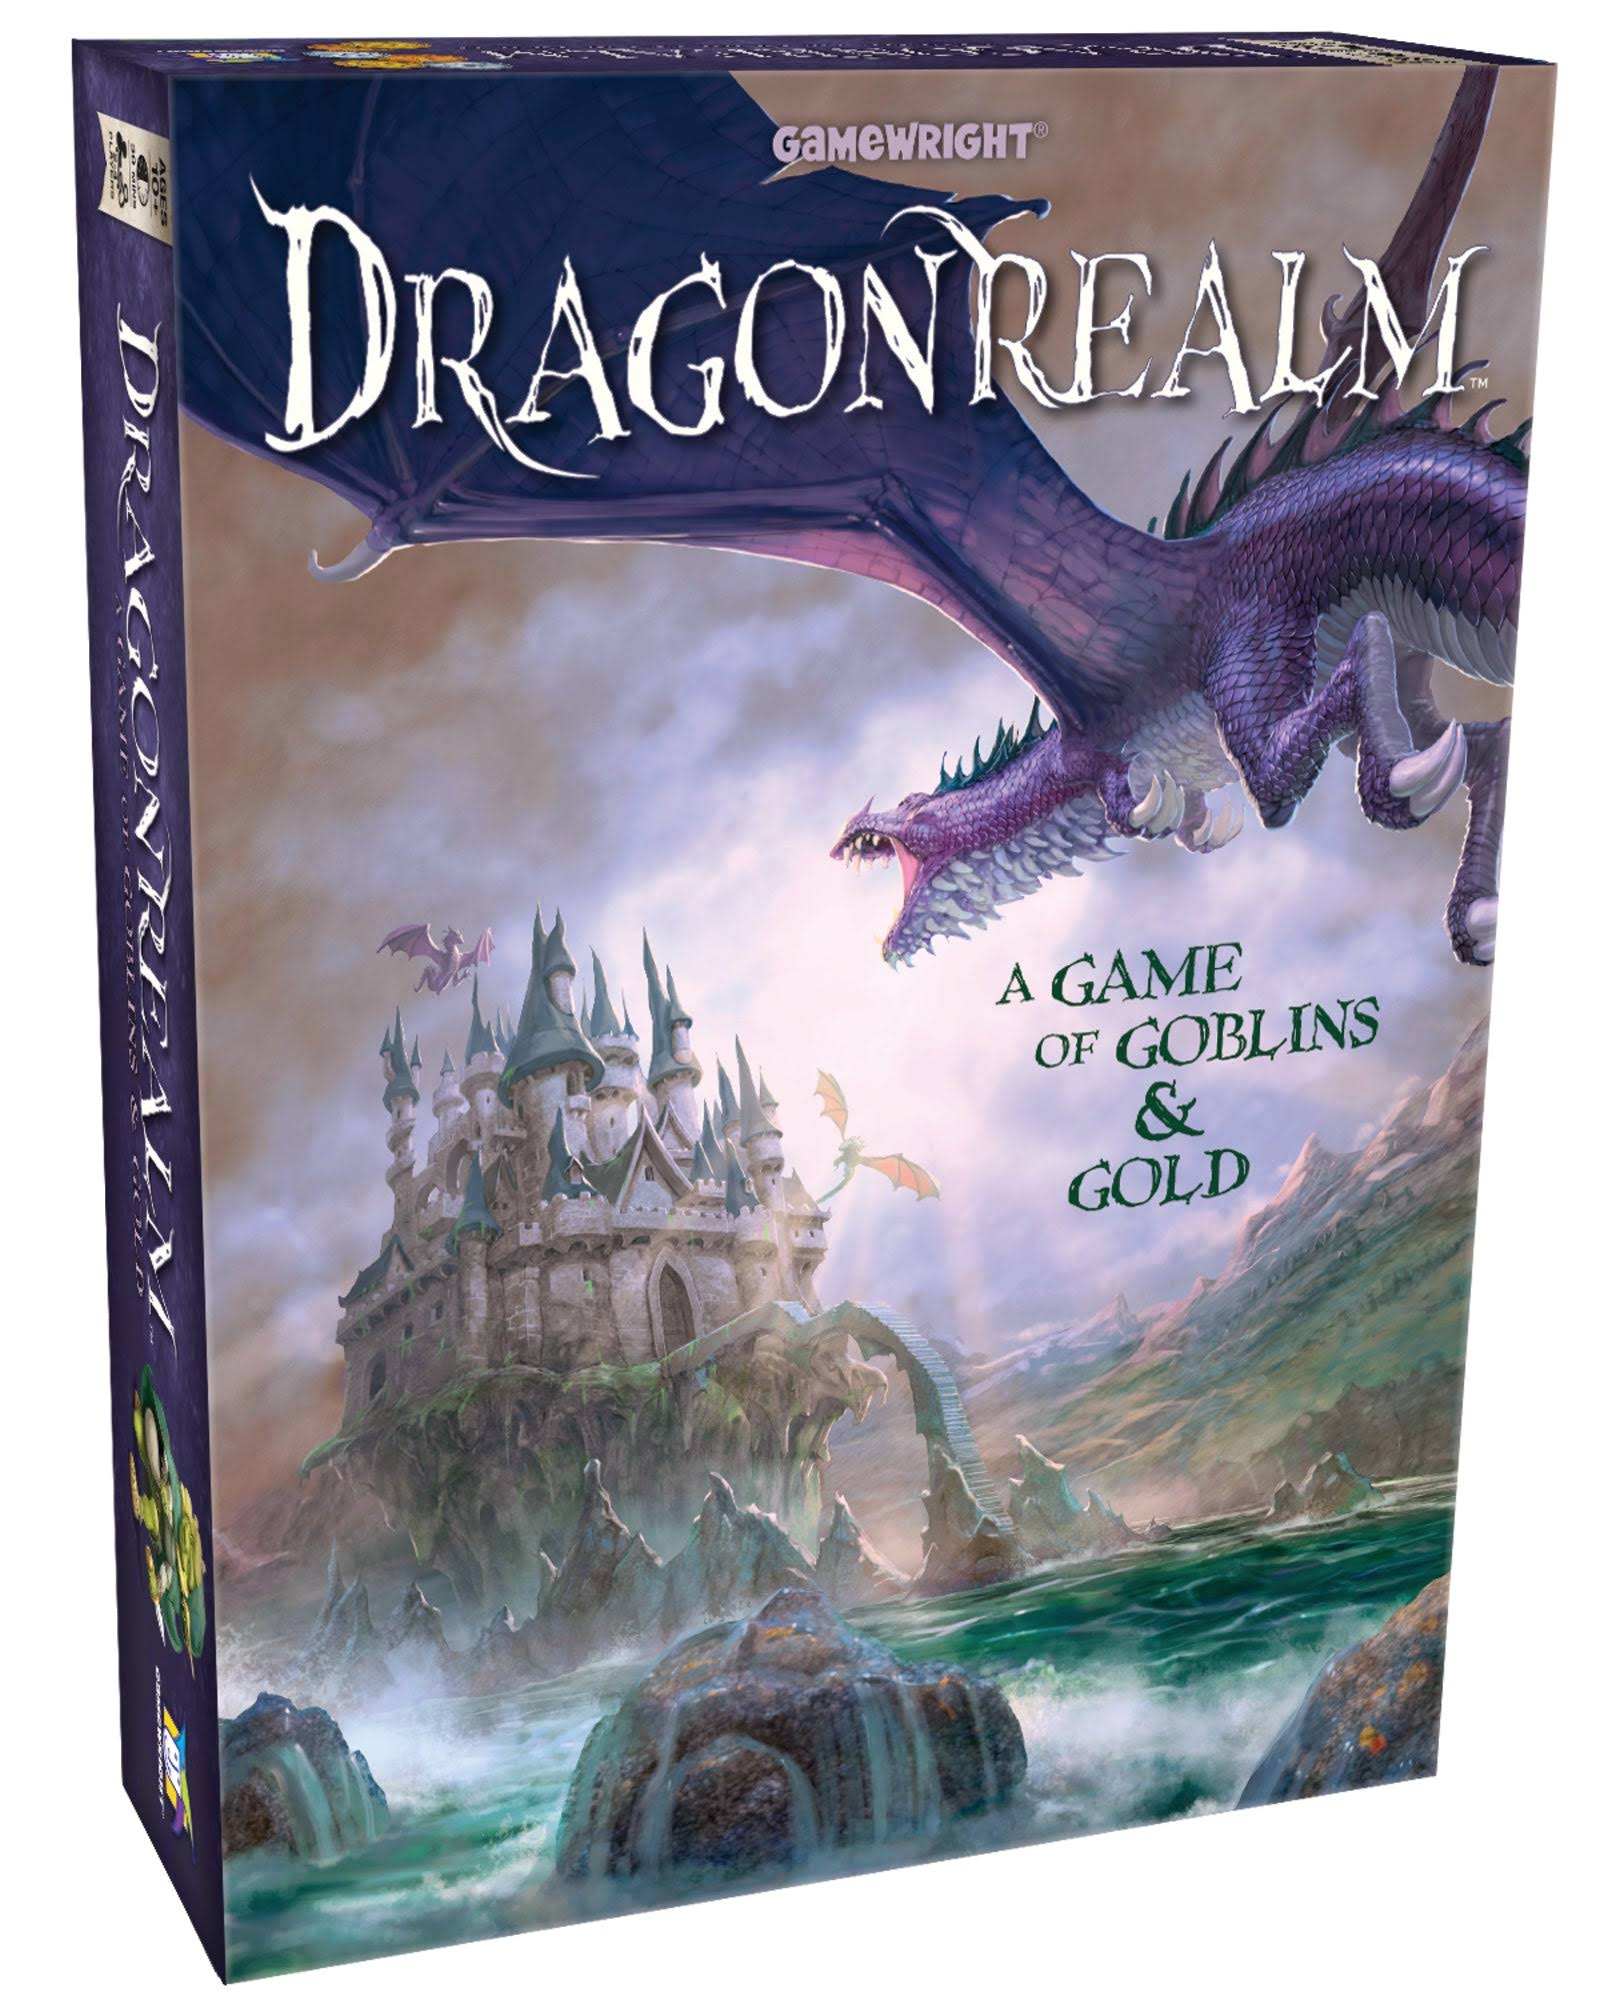 Gamewright Dragonrealm Goblin & Gold Game